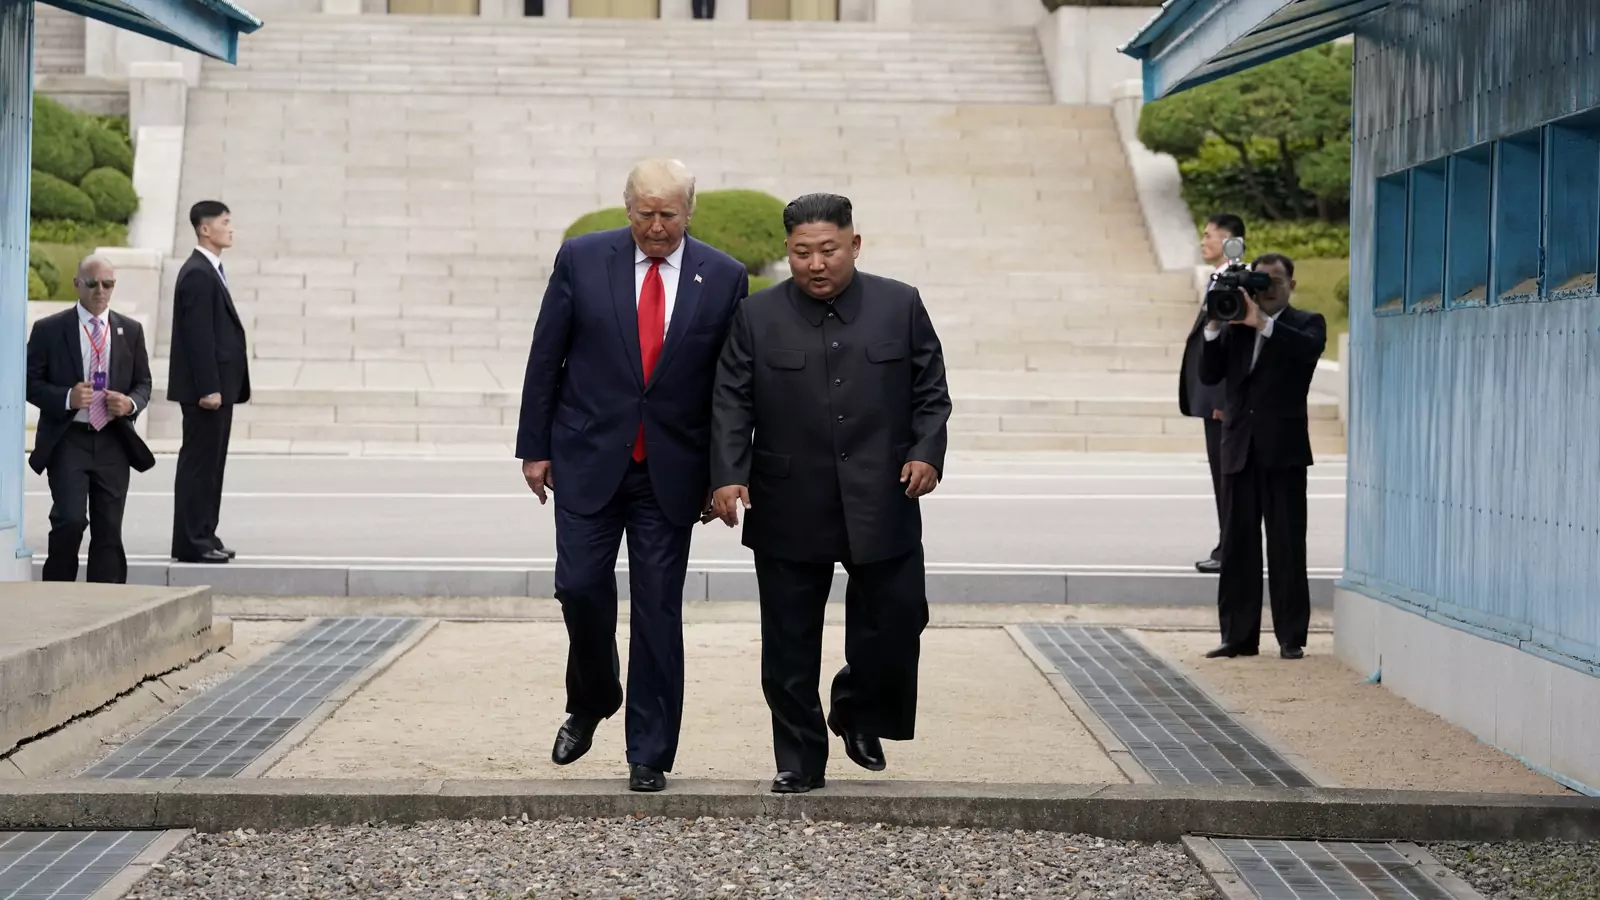 Trump Kim Dmz Meeting Is Kim Jong Un Foil Friend Or Foe Council On Foreign Relations